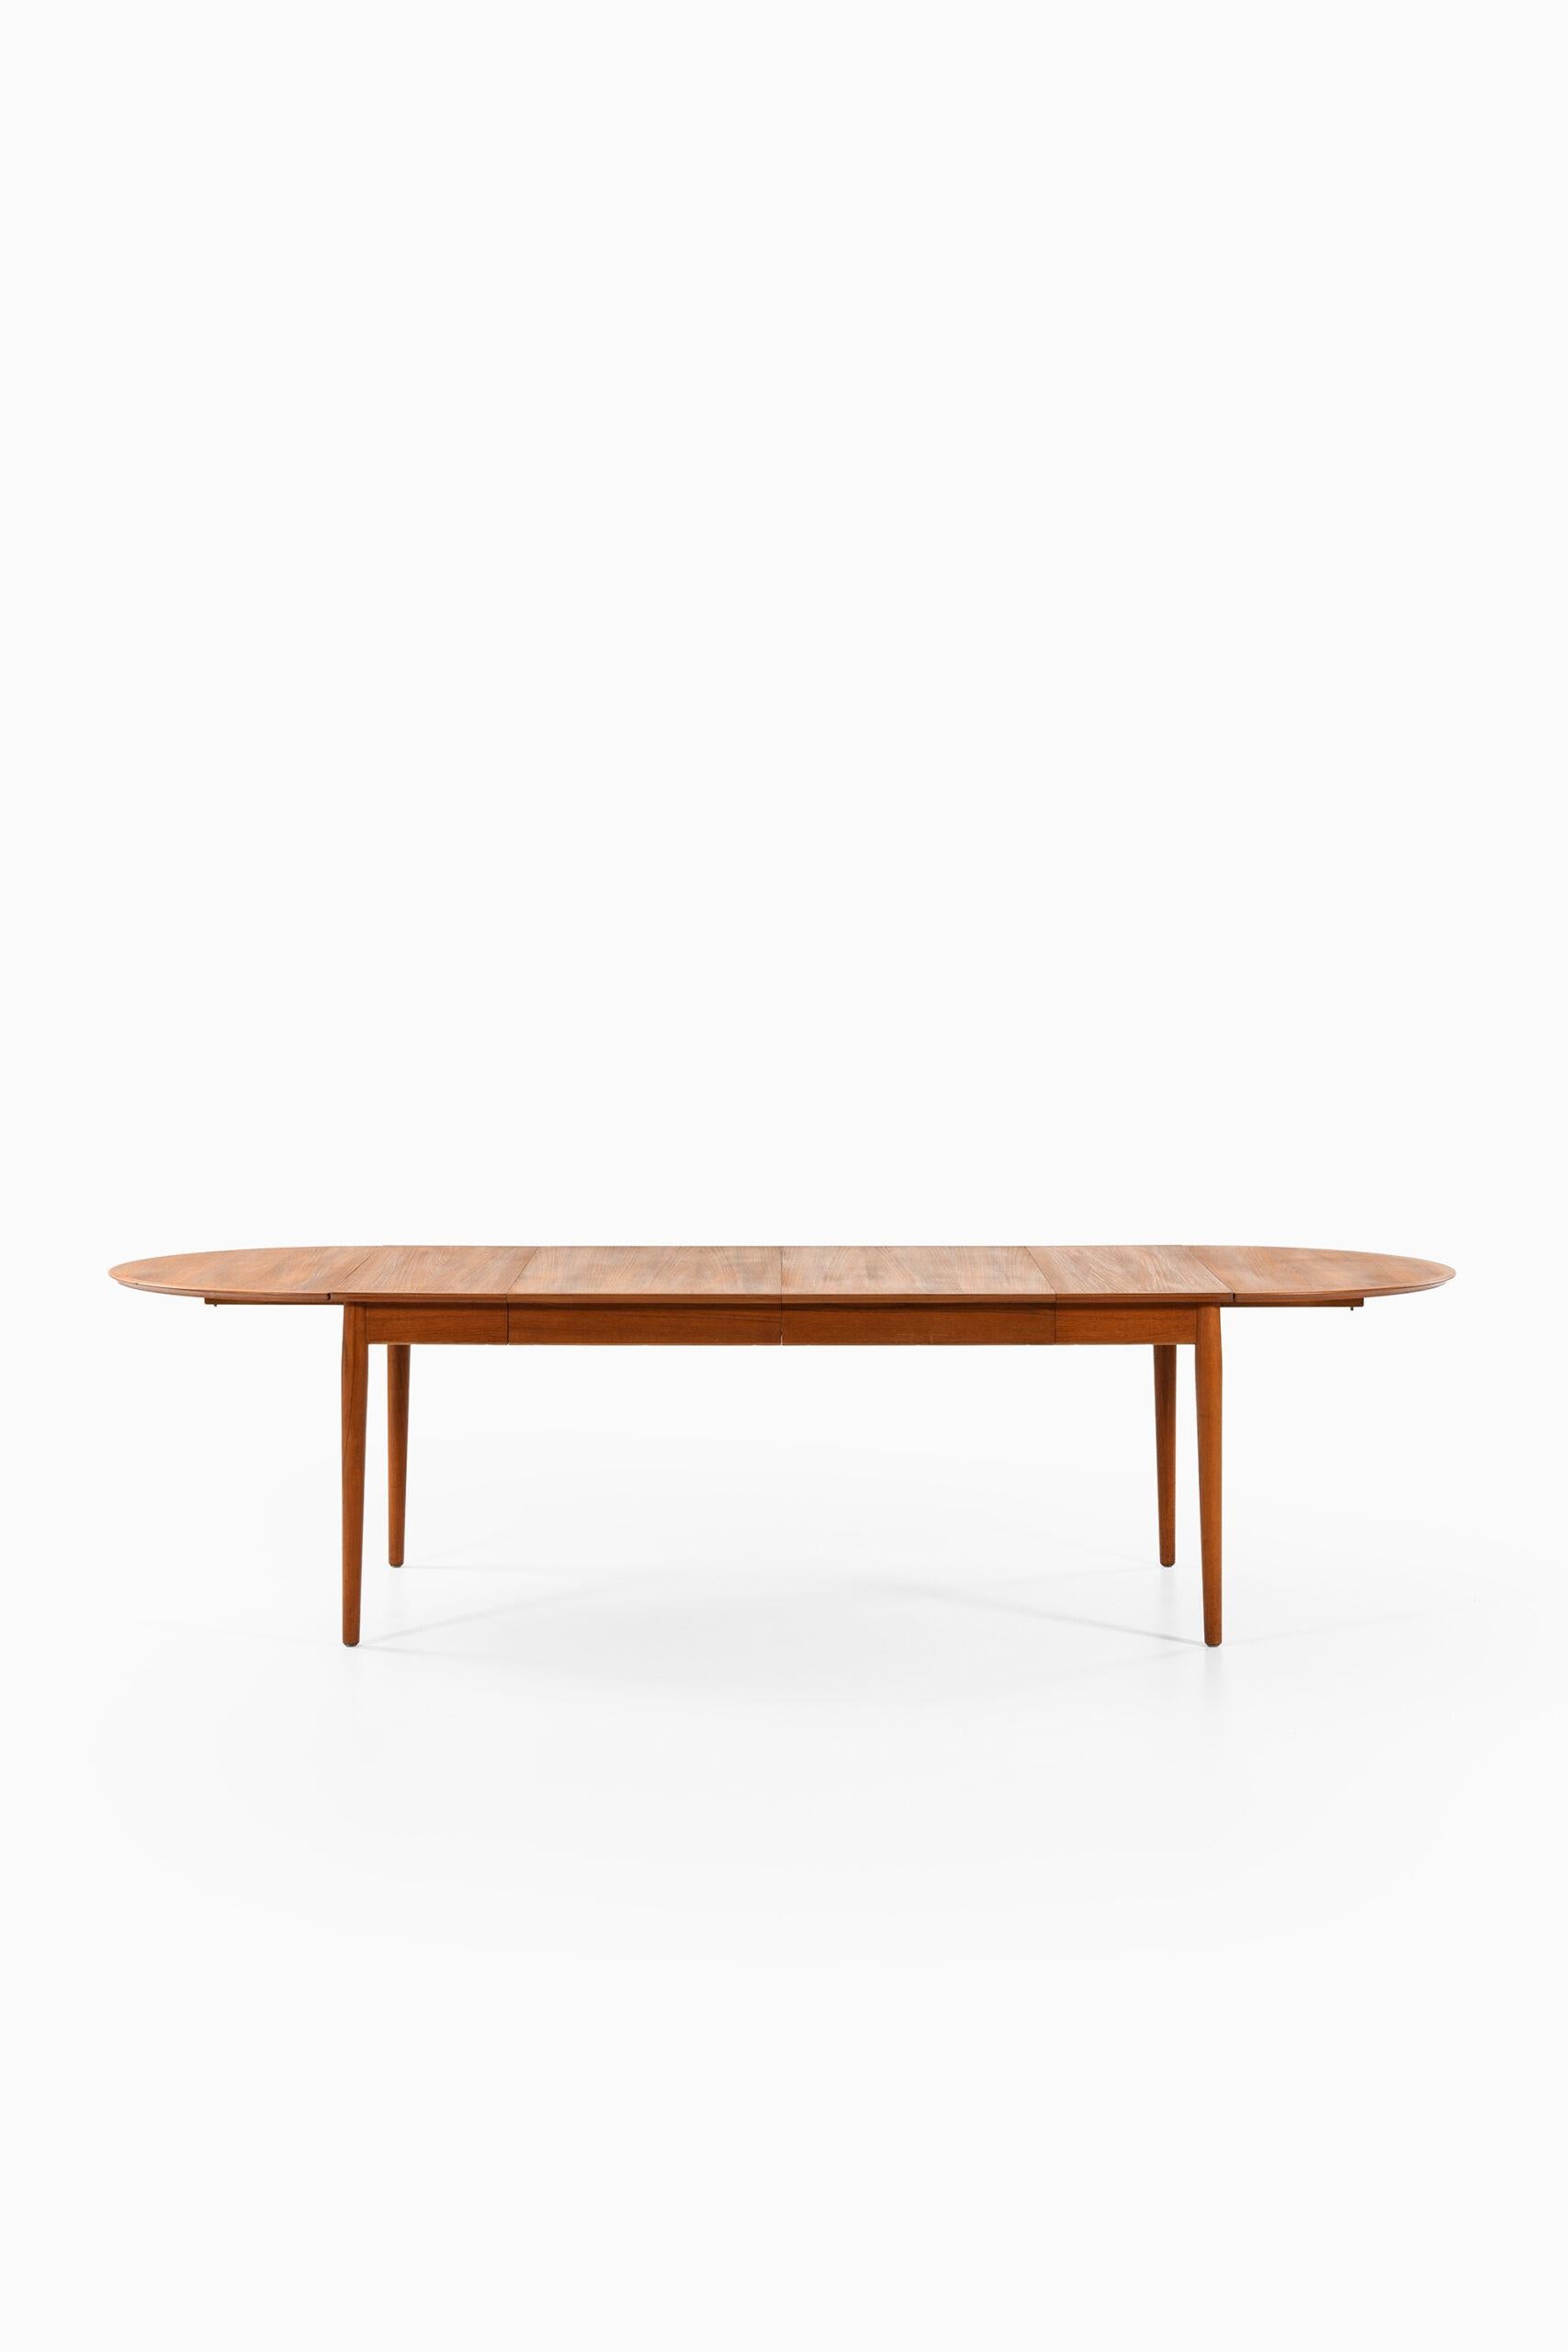 Arne Vodder Dining Table Model 227 Produced by Sibast in Denmark For Sale 4